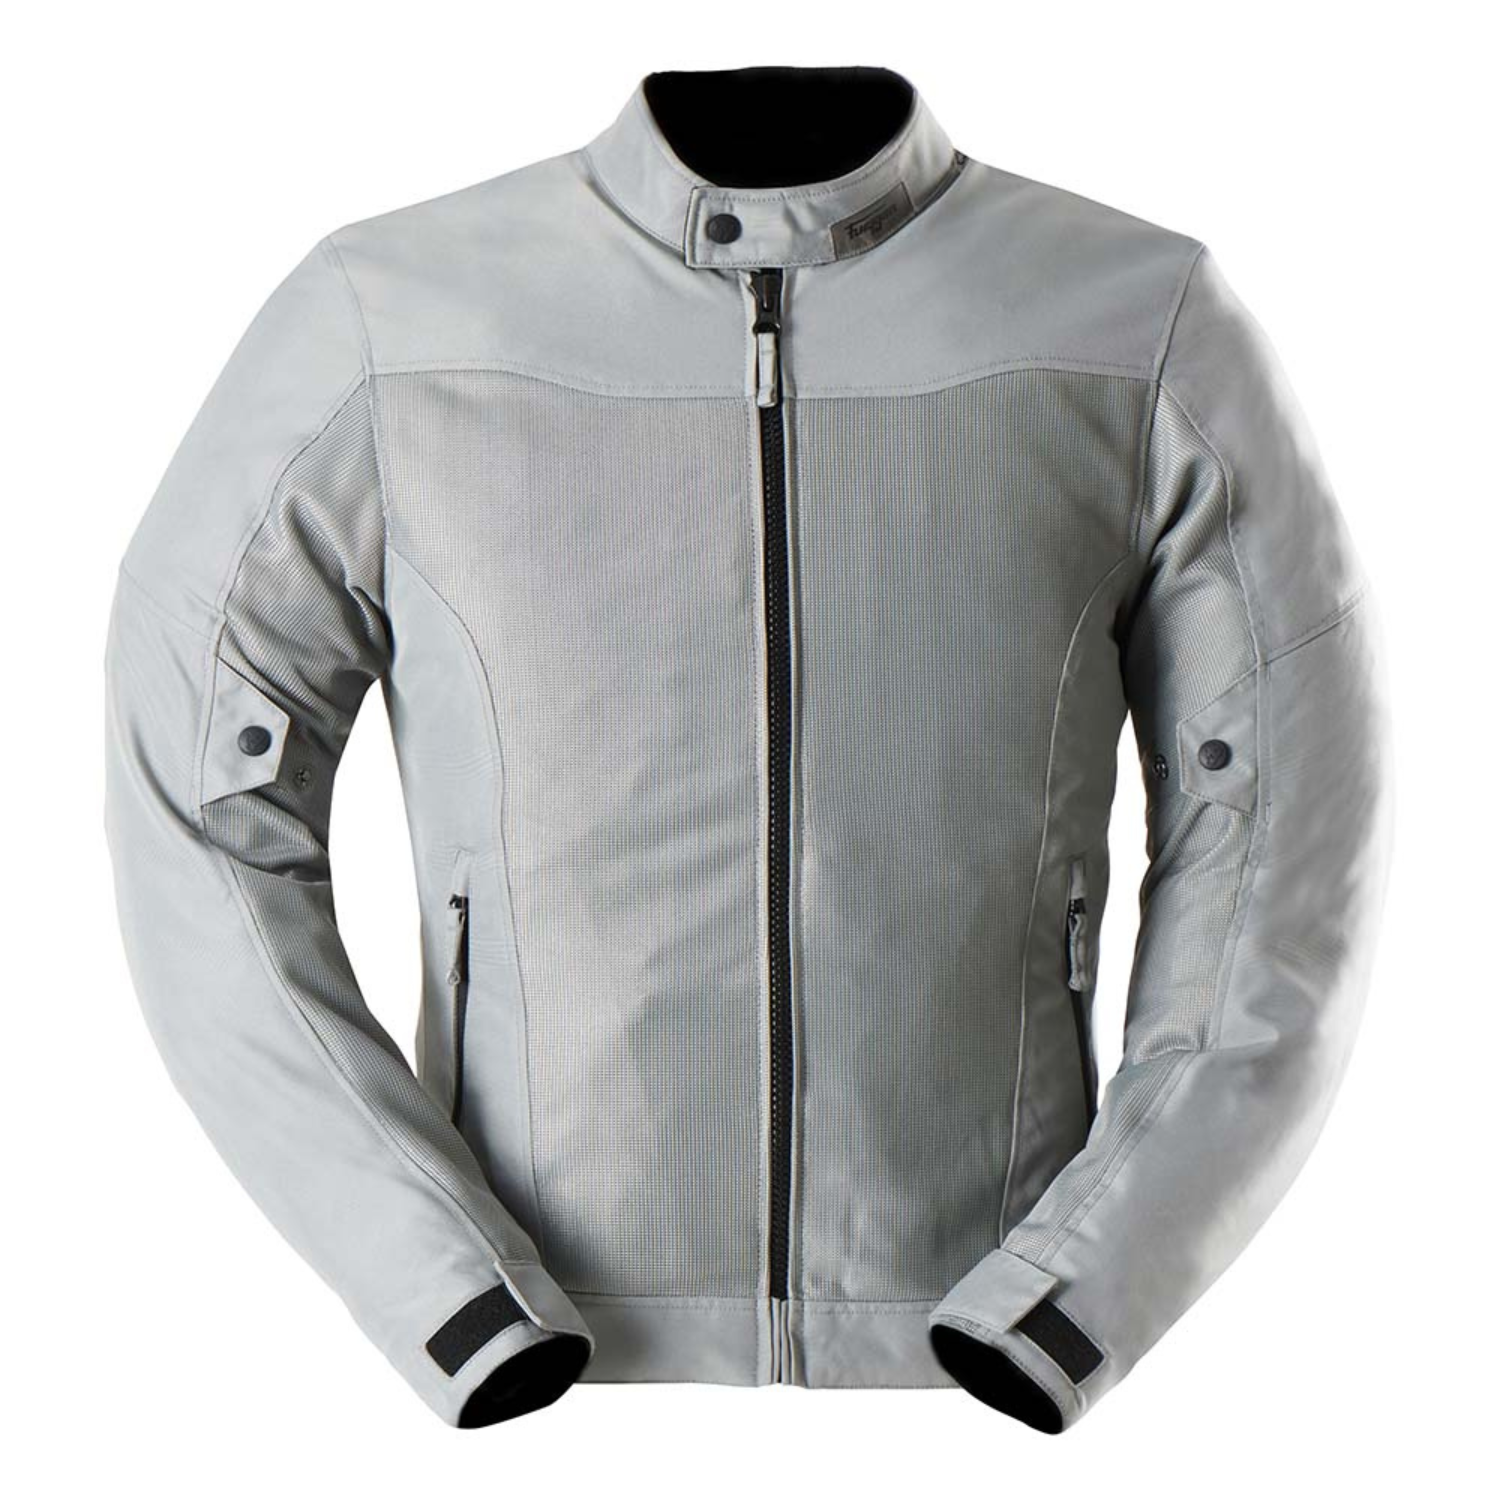 Image of Furygan Mistral Evo 3 Jacket Grey Size 2XL EN